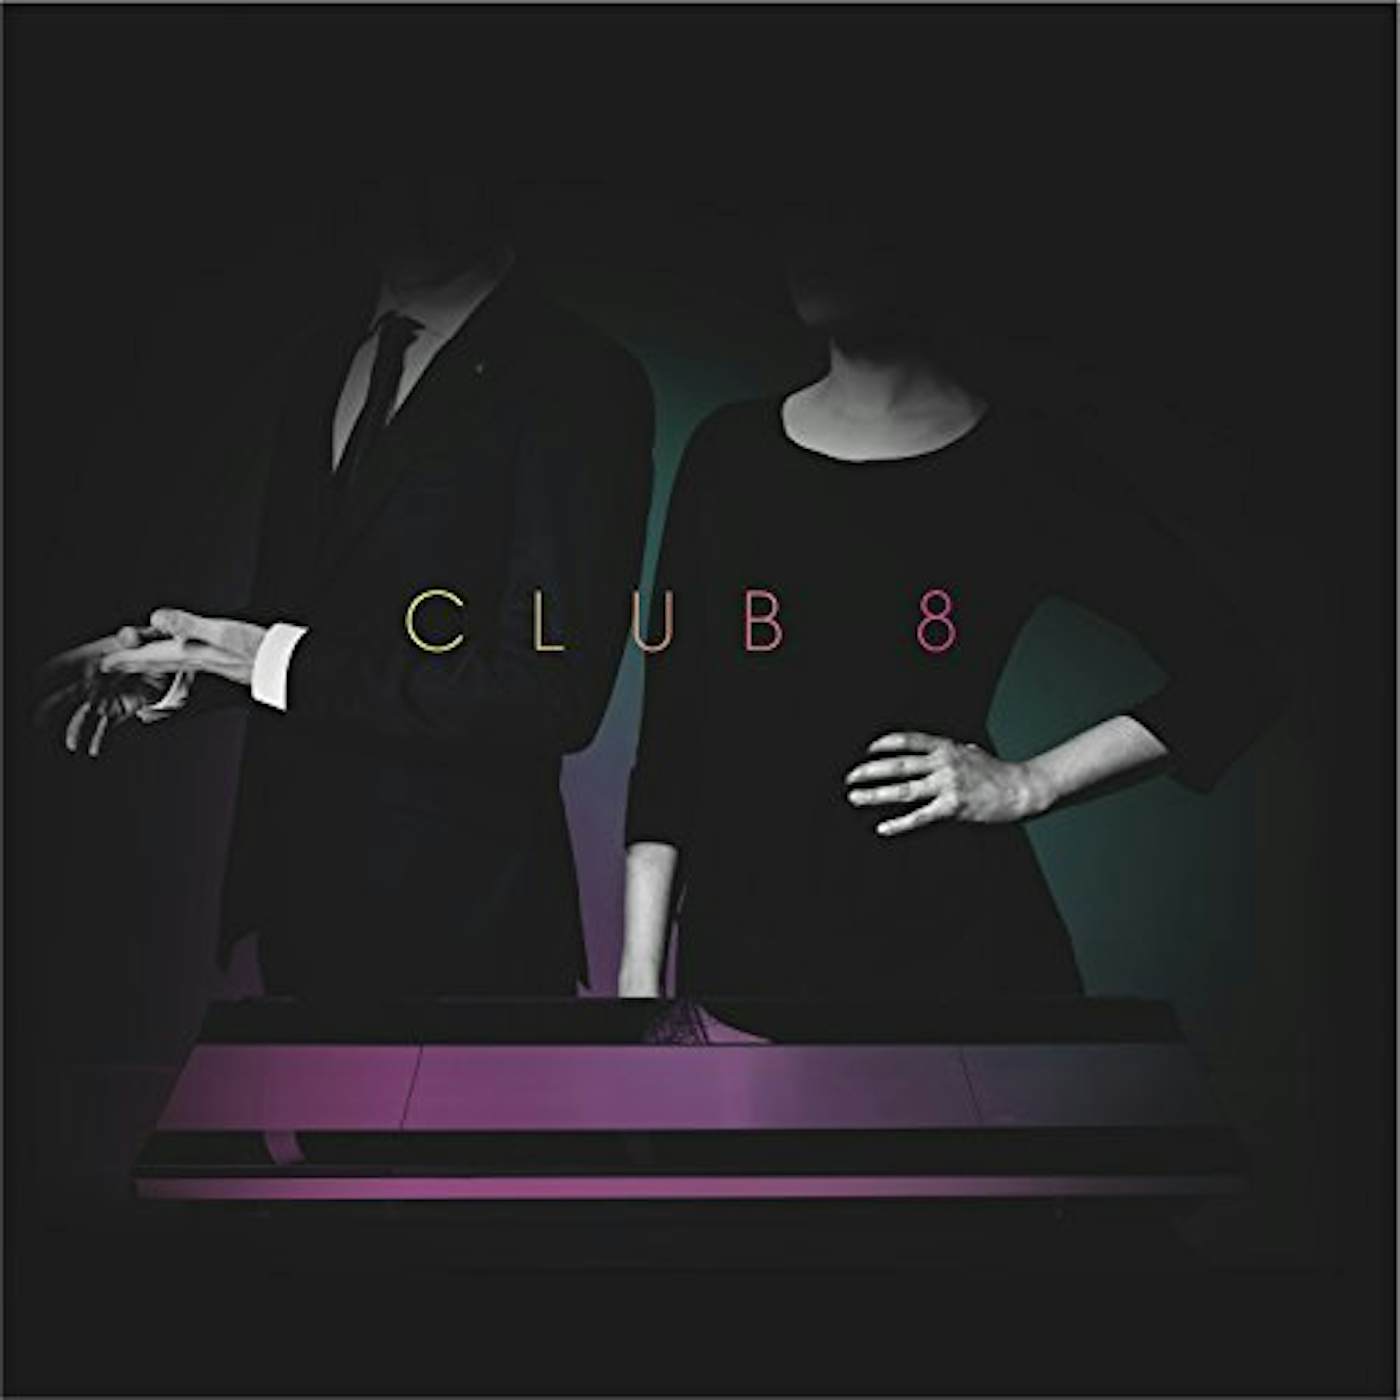 Club 8 Pleasure Vinyl Record